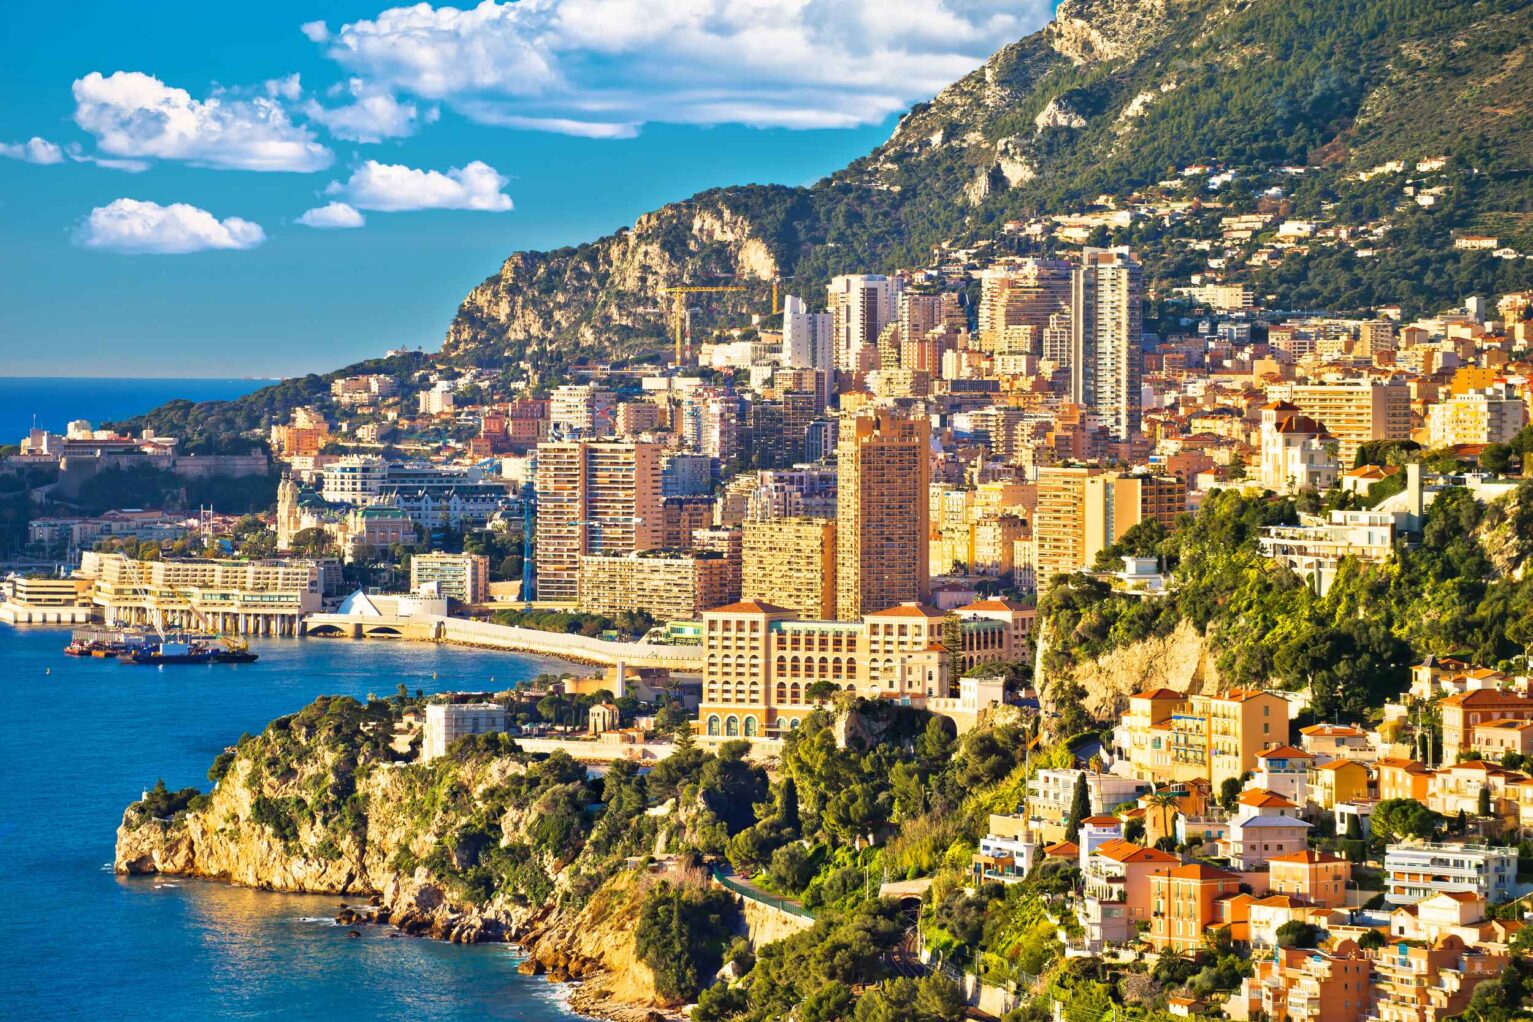 The breath-taking coastline of Monaco during a Viking cruise in the Mediterranean.